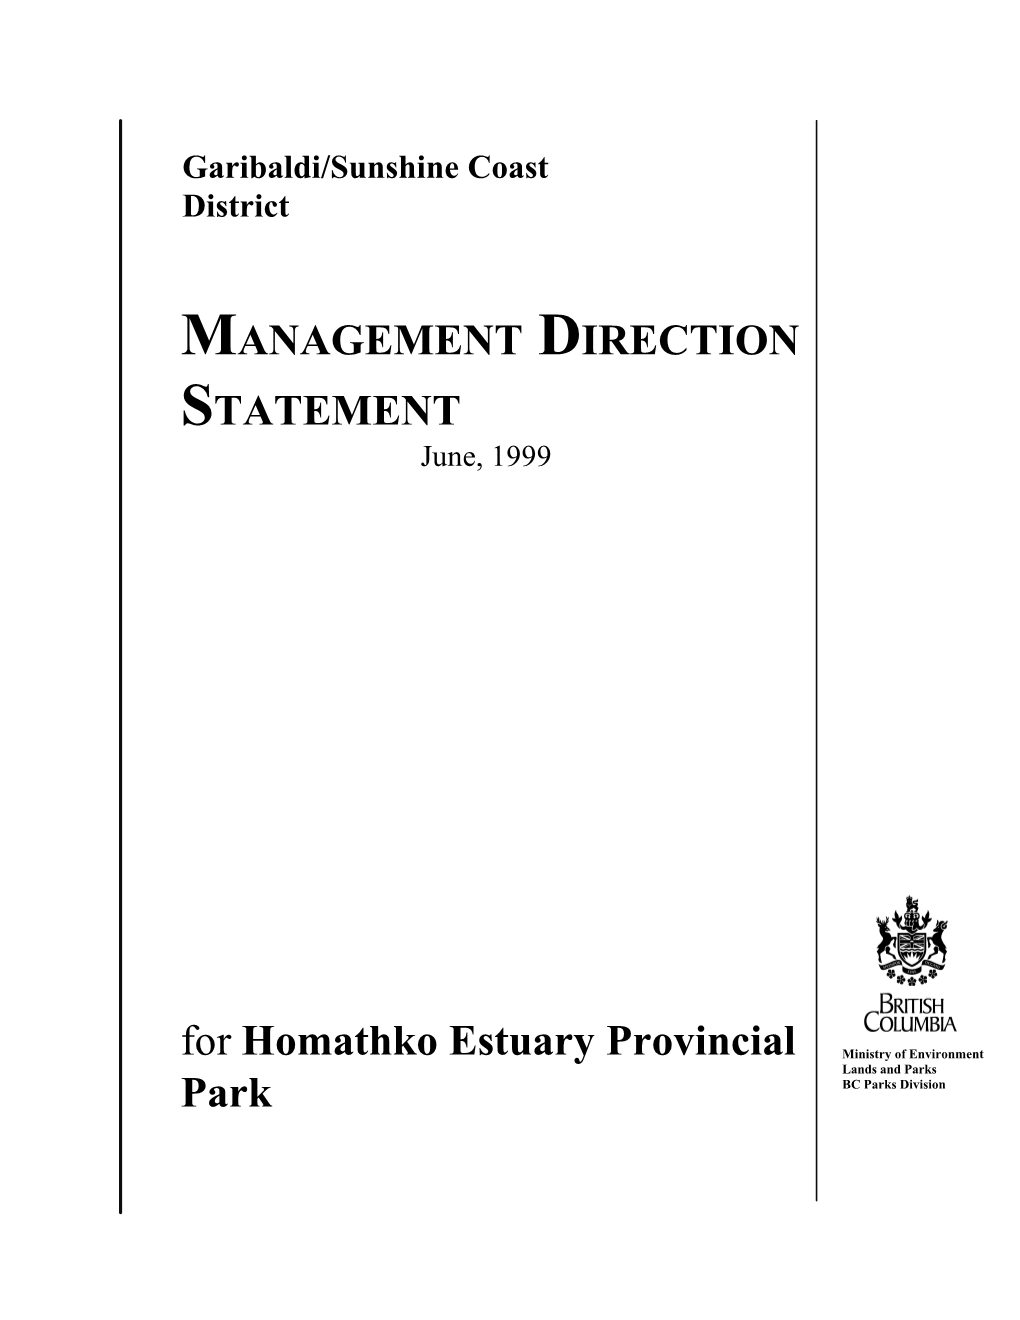 MANAGEMENT DIRECTION STATEMENT for Homathko Estuary Provincial Park